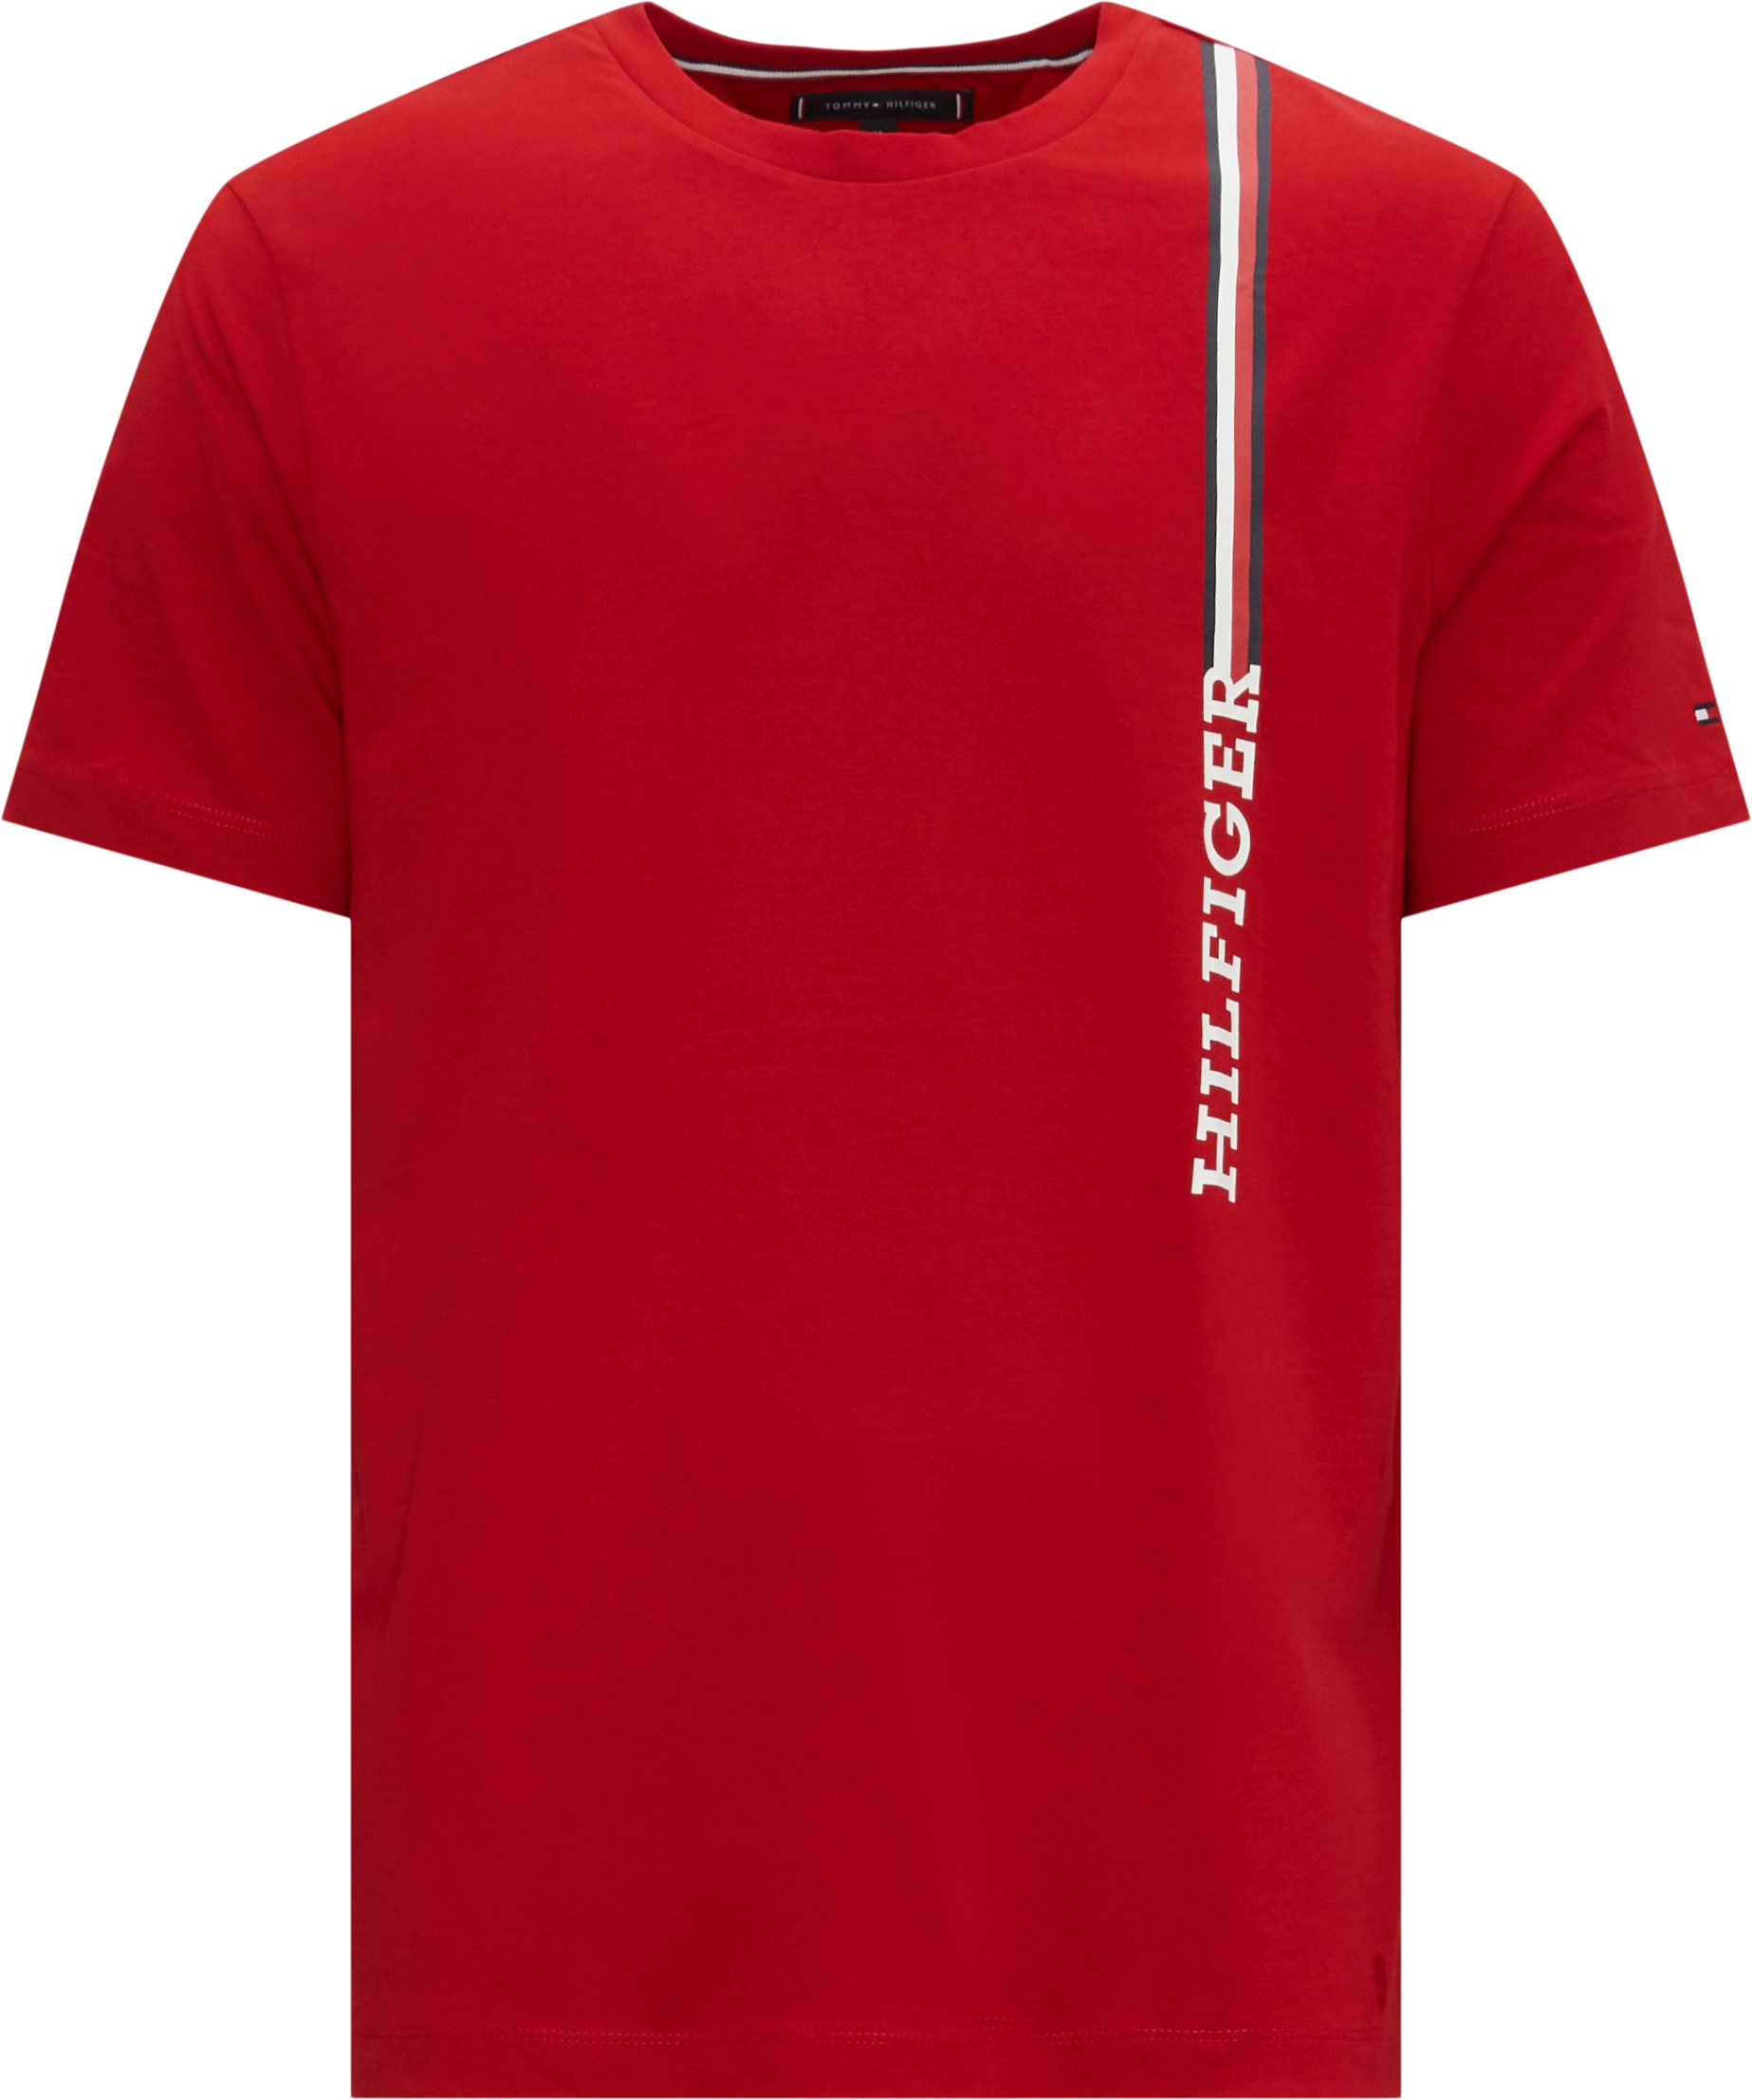 32118 RWB MONOTYPE STR T-shirts fra Tommy Hilfiger 350 DKK